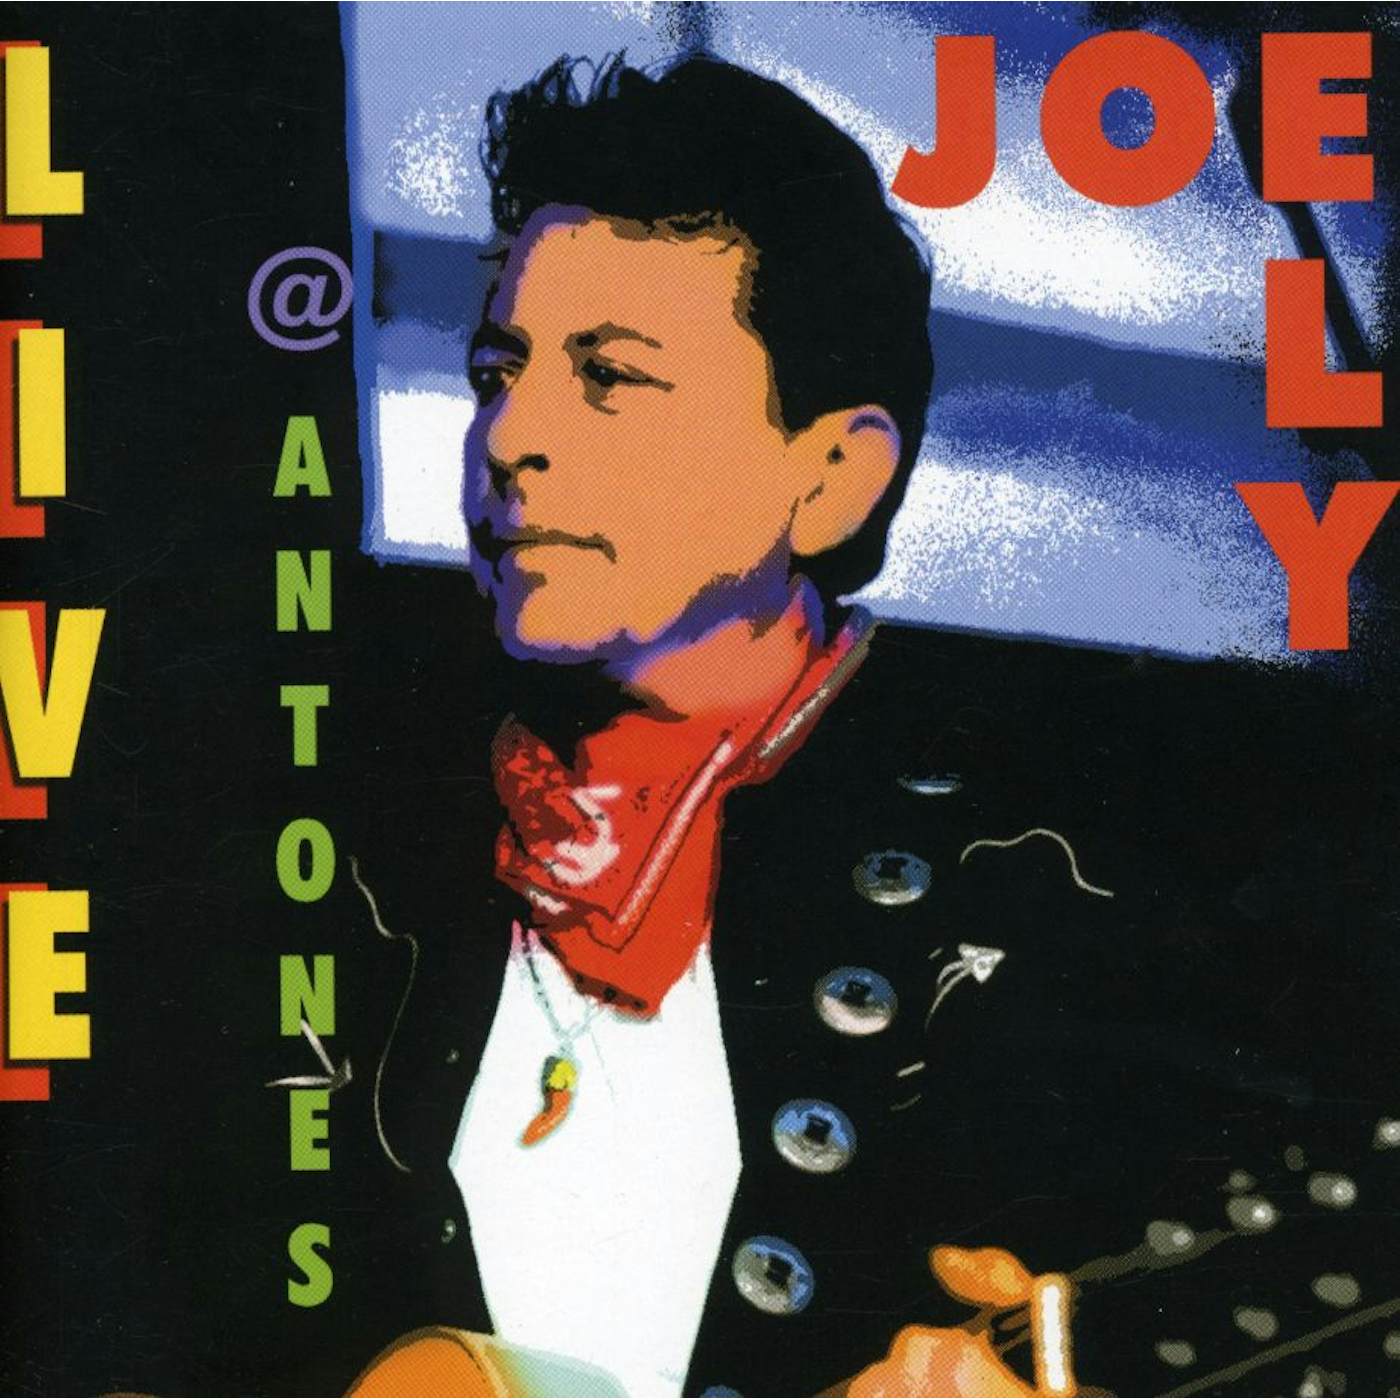 Joe Ely LIVE AT ANTONE'S CD